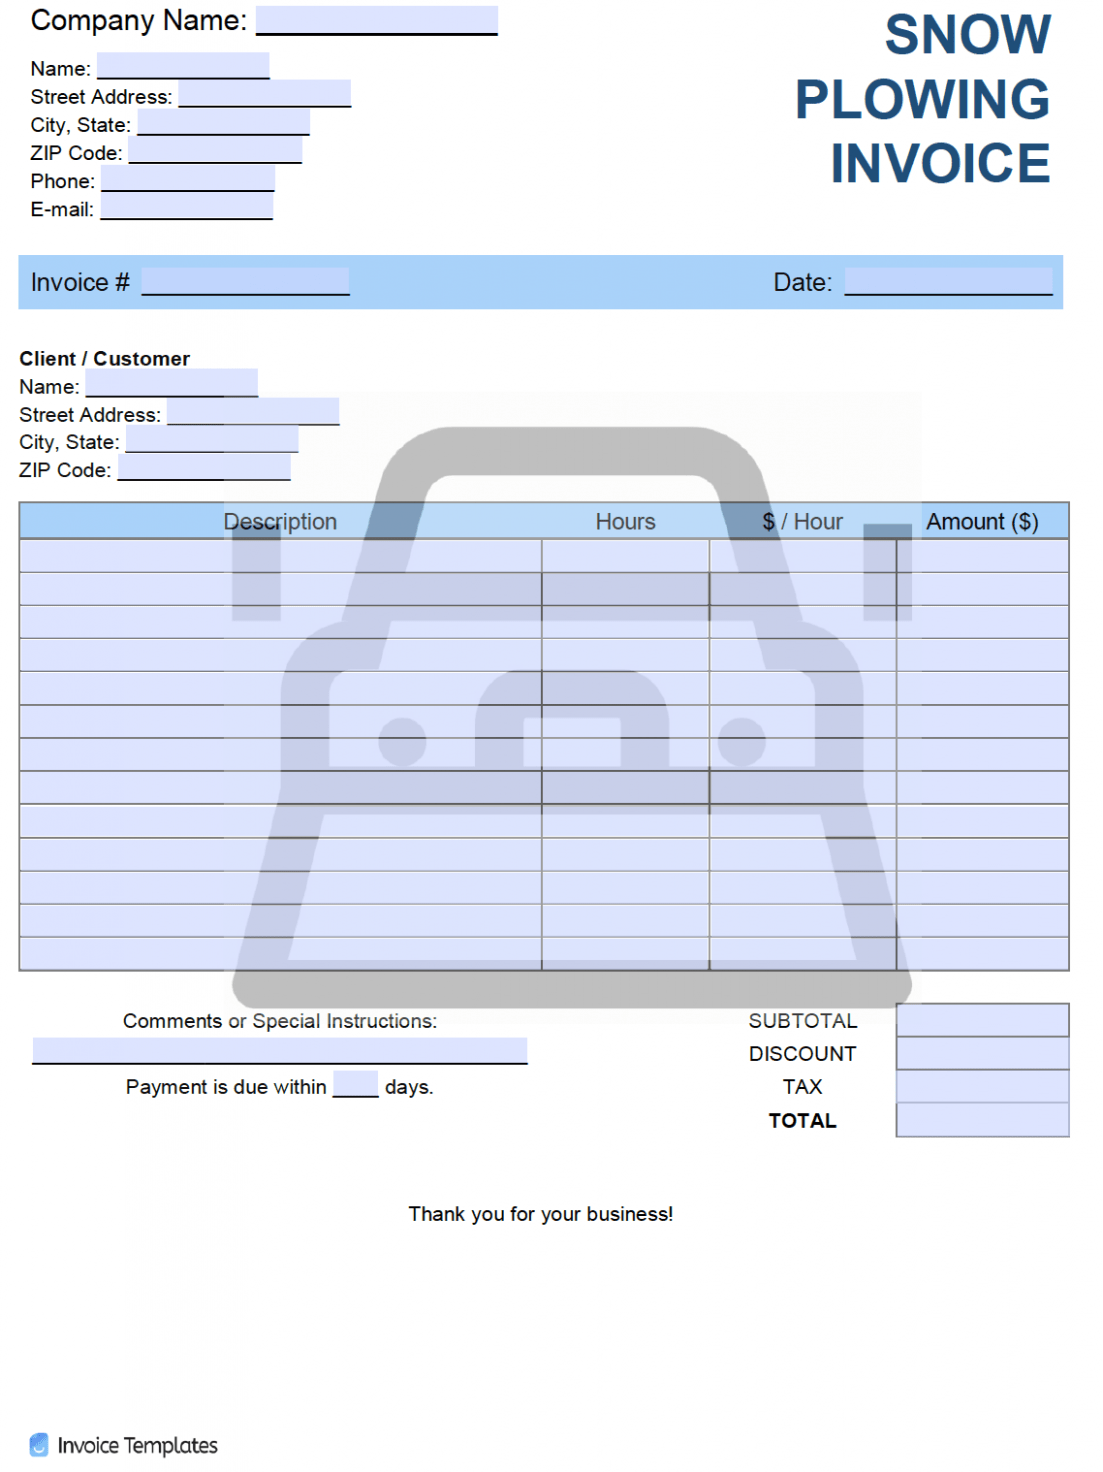 Sample Snow Removal Invoice Template PDF